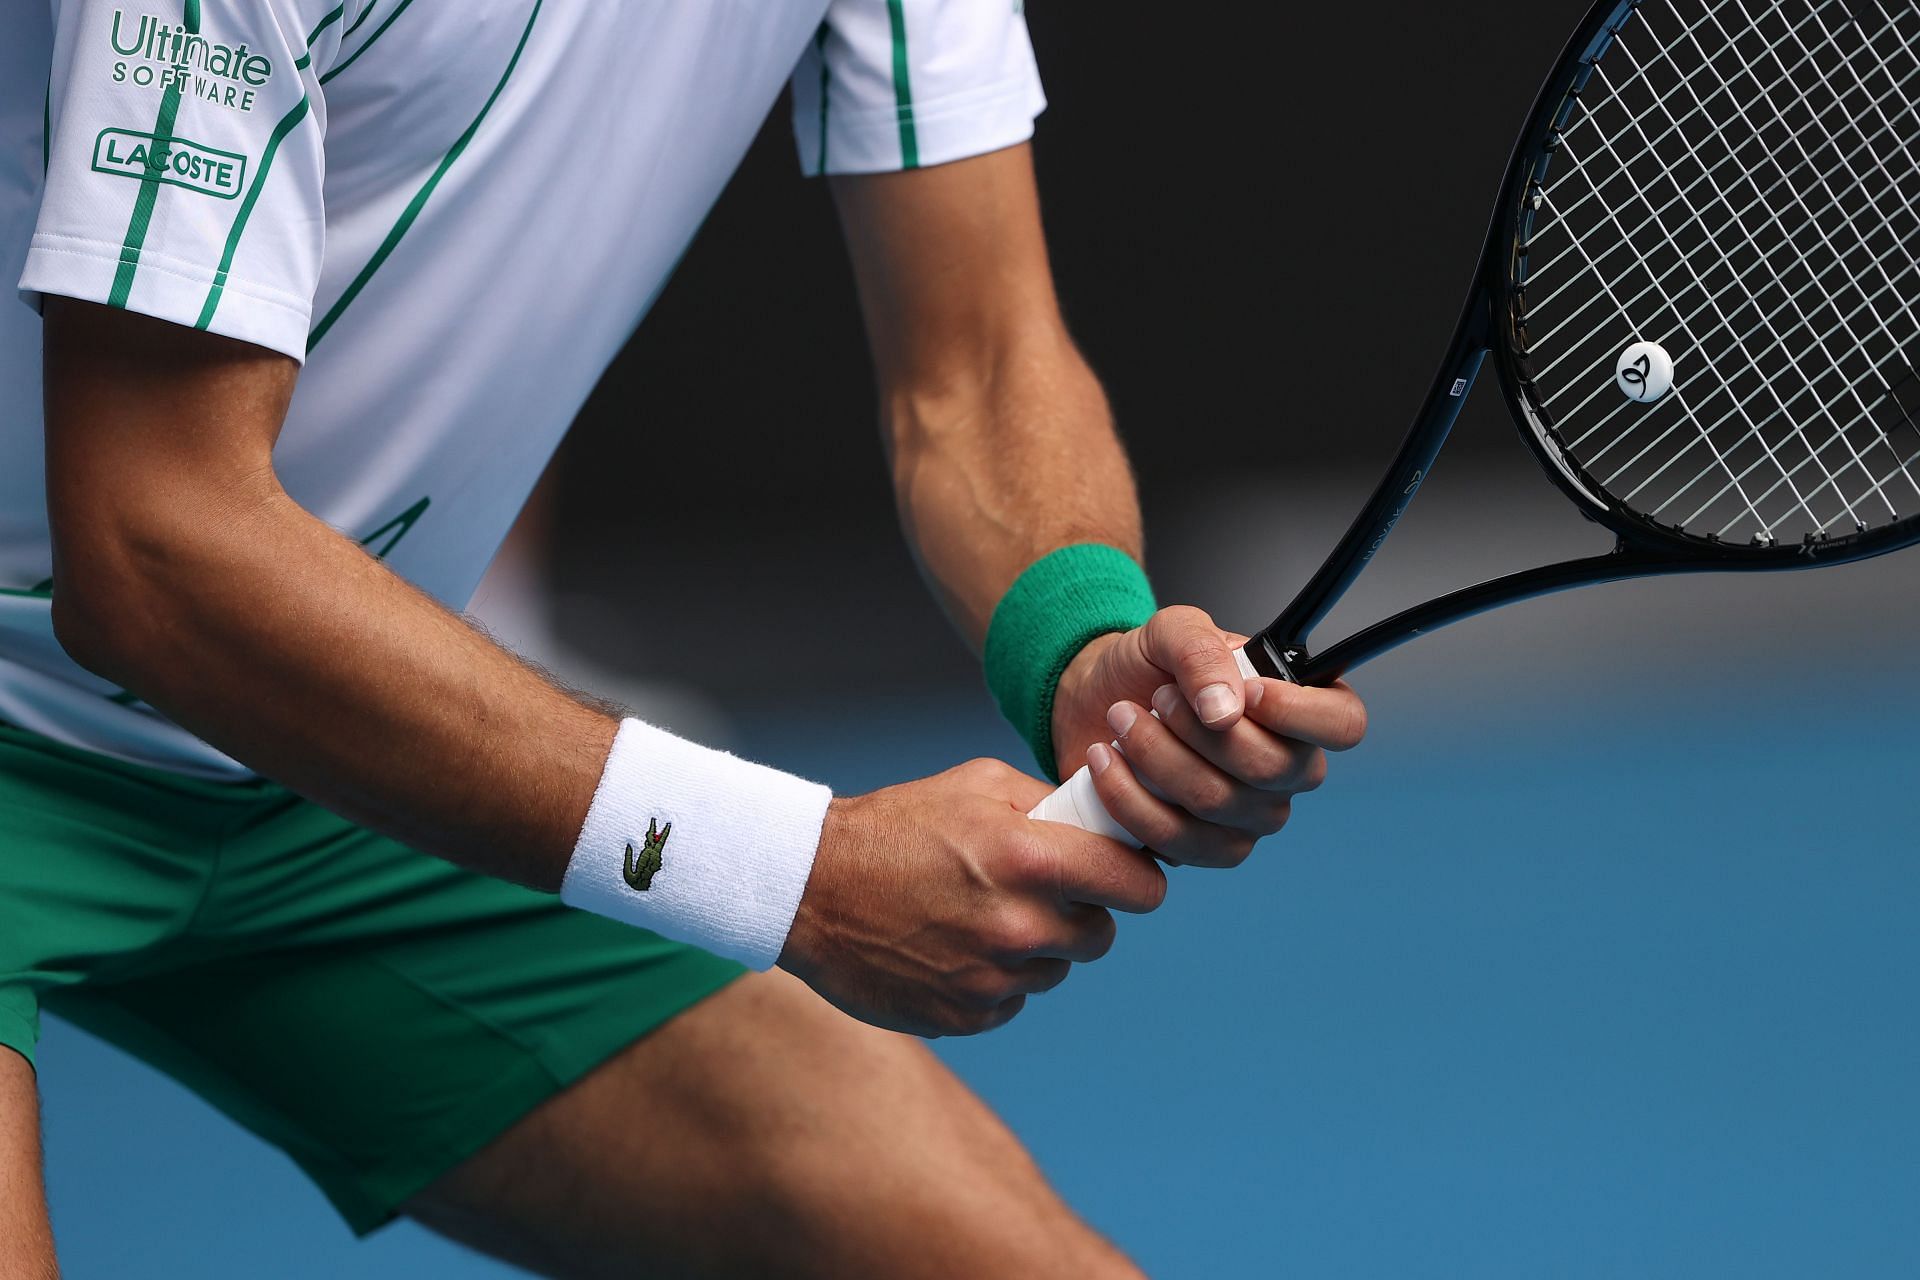 Novak Djokoivc at the 2020 Australian Open - Day 3